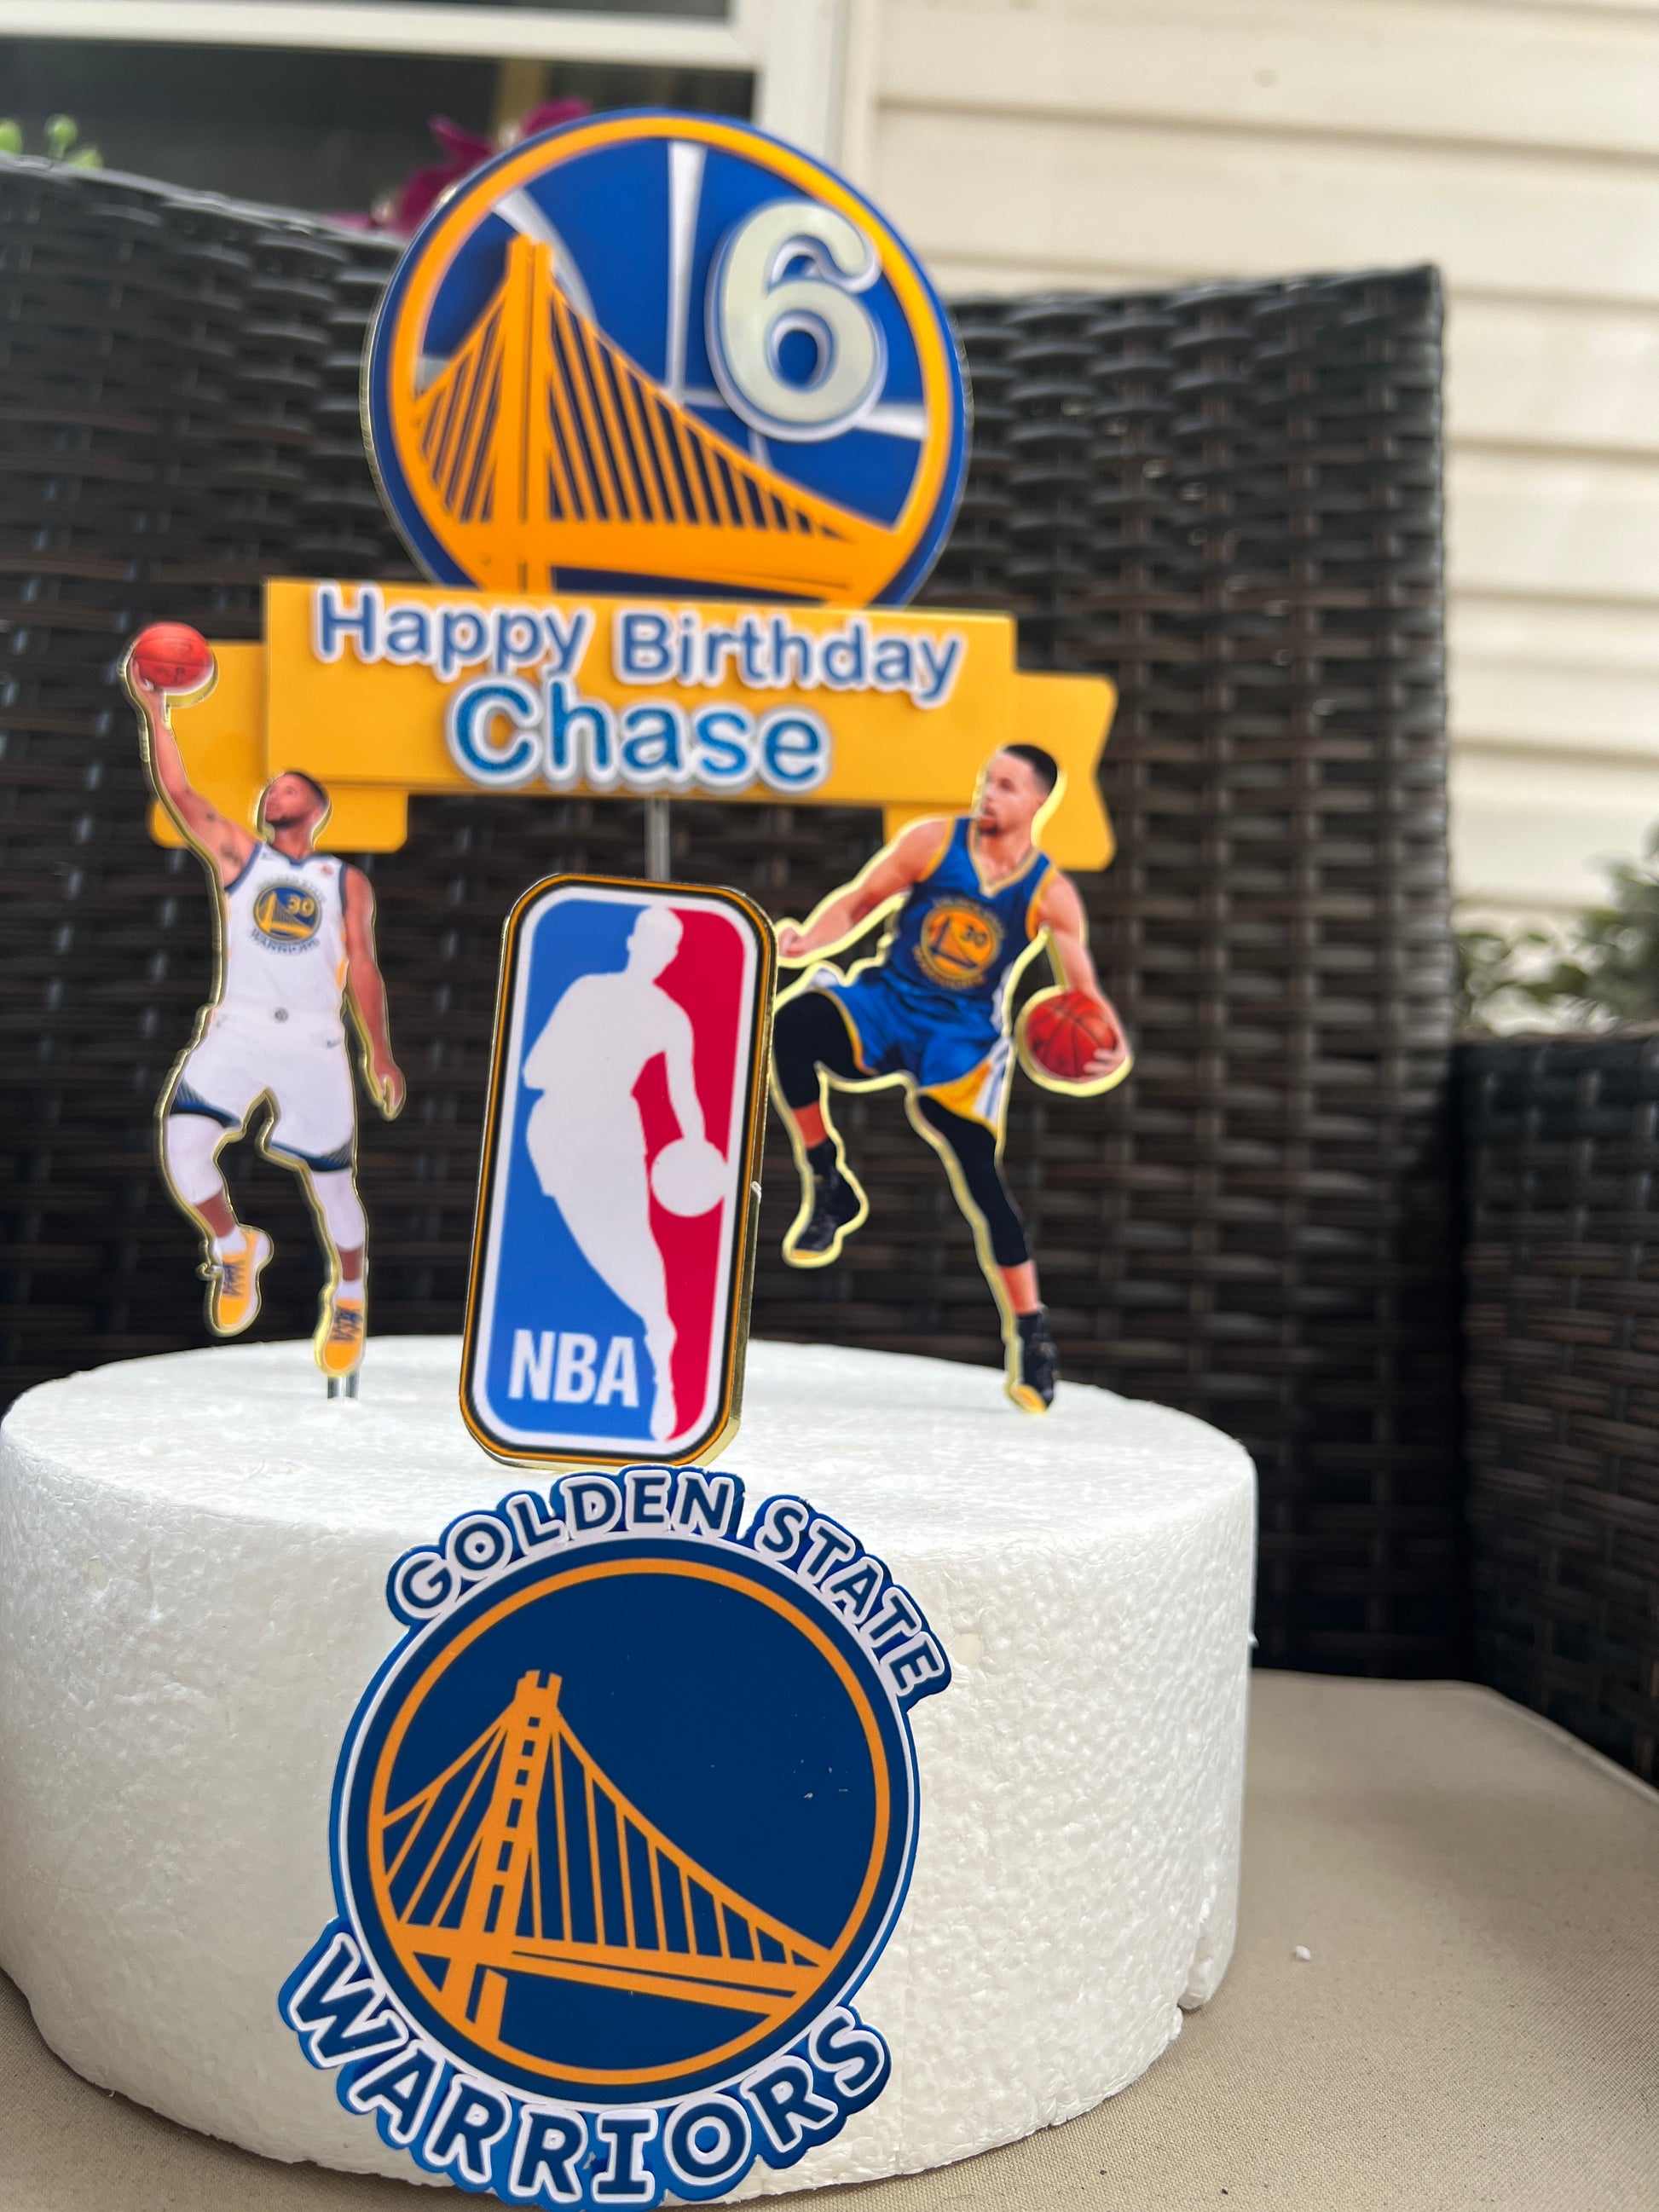 NBA Golden State Warriors Cake Topper Image Basketball